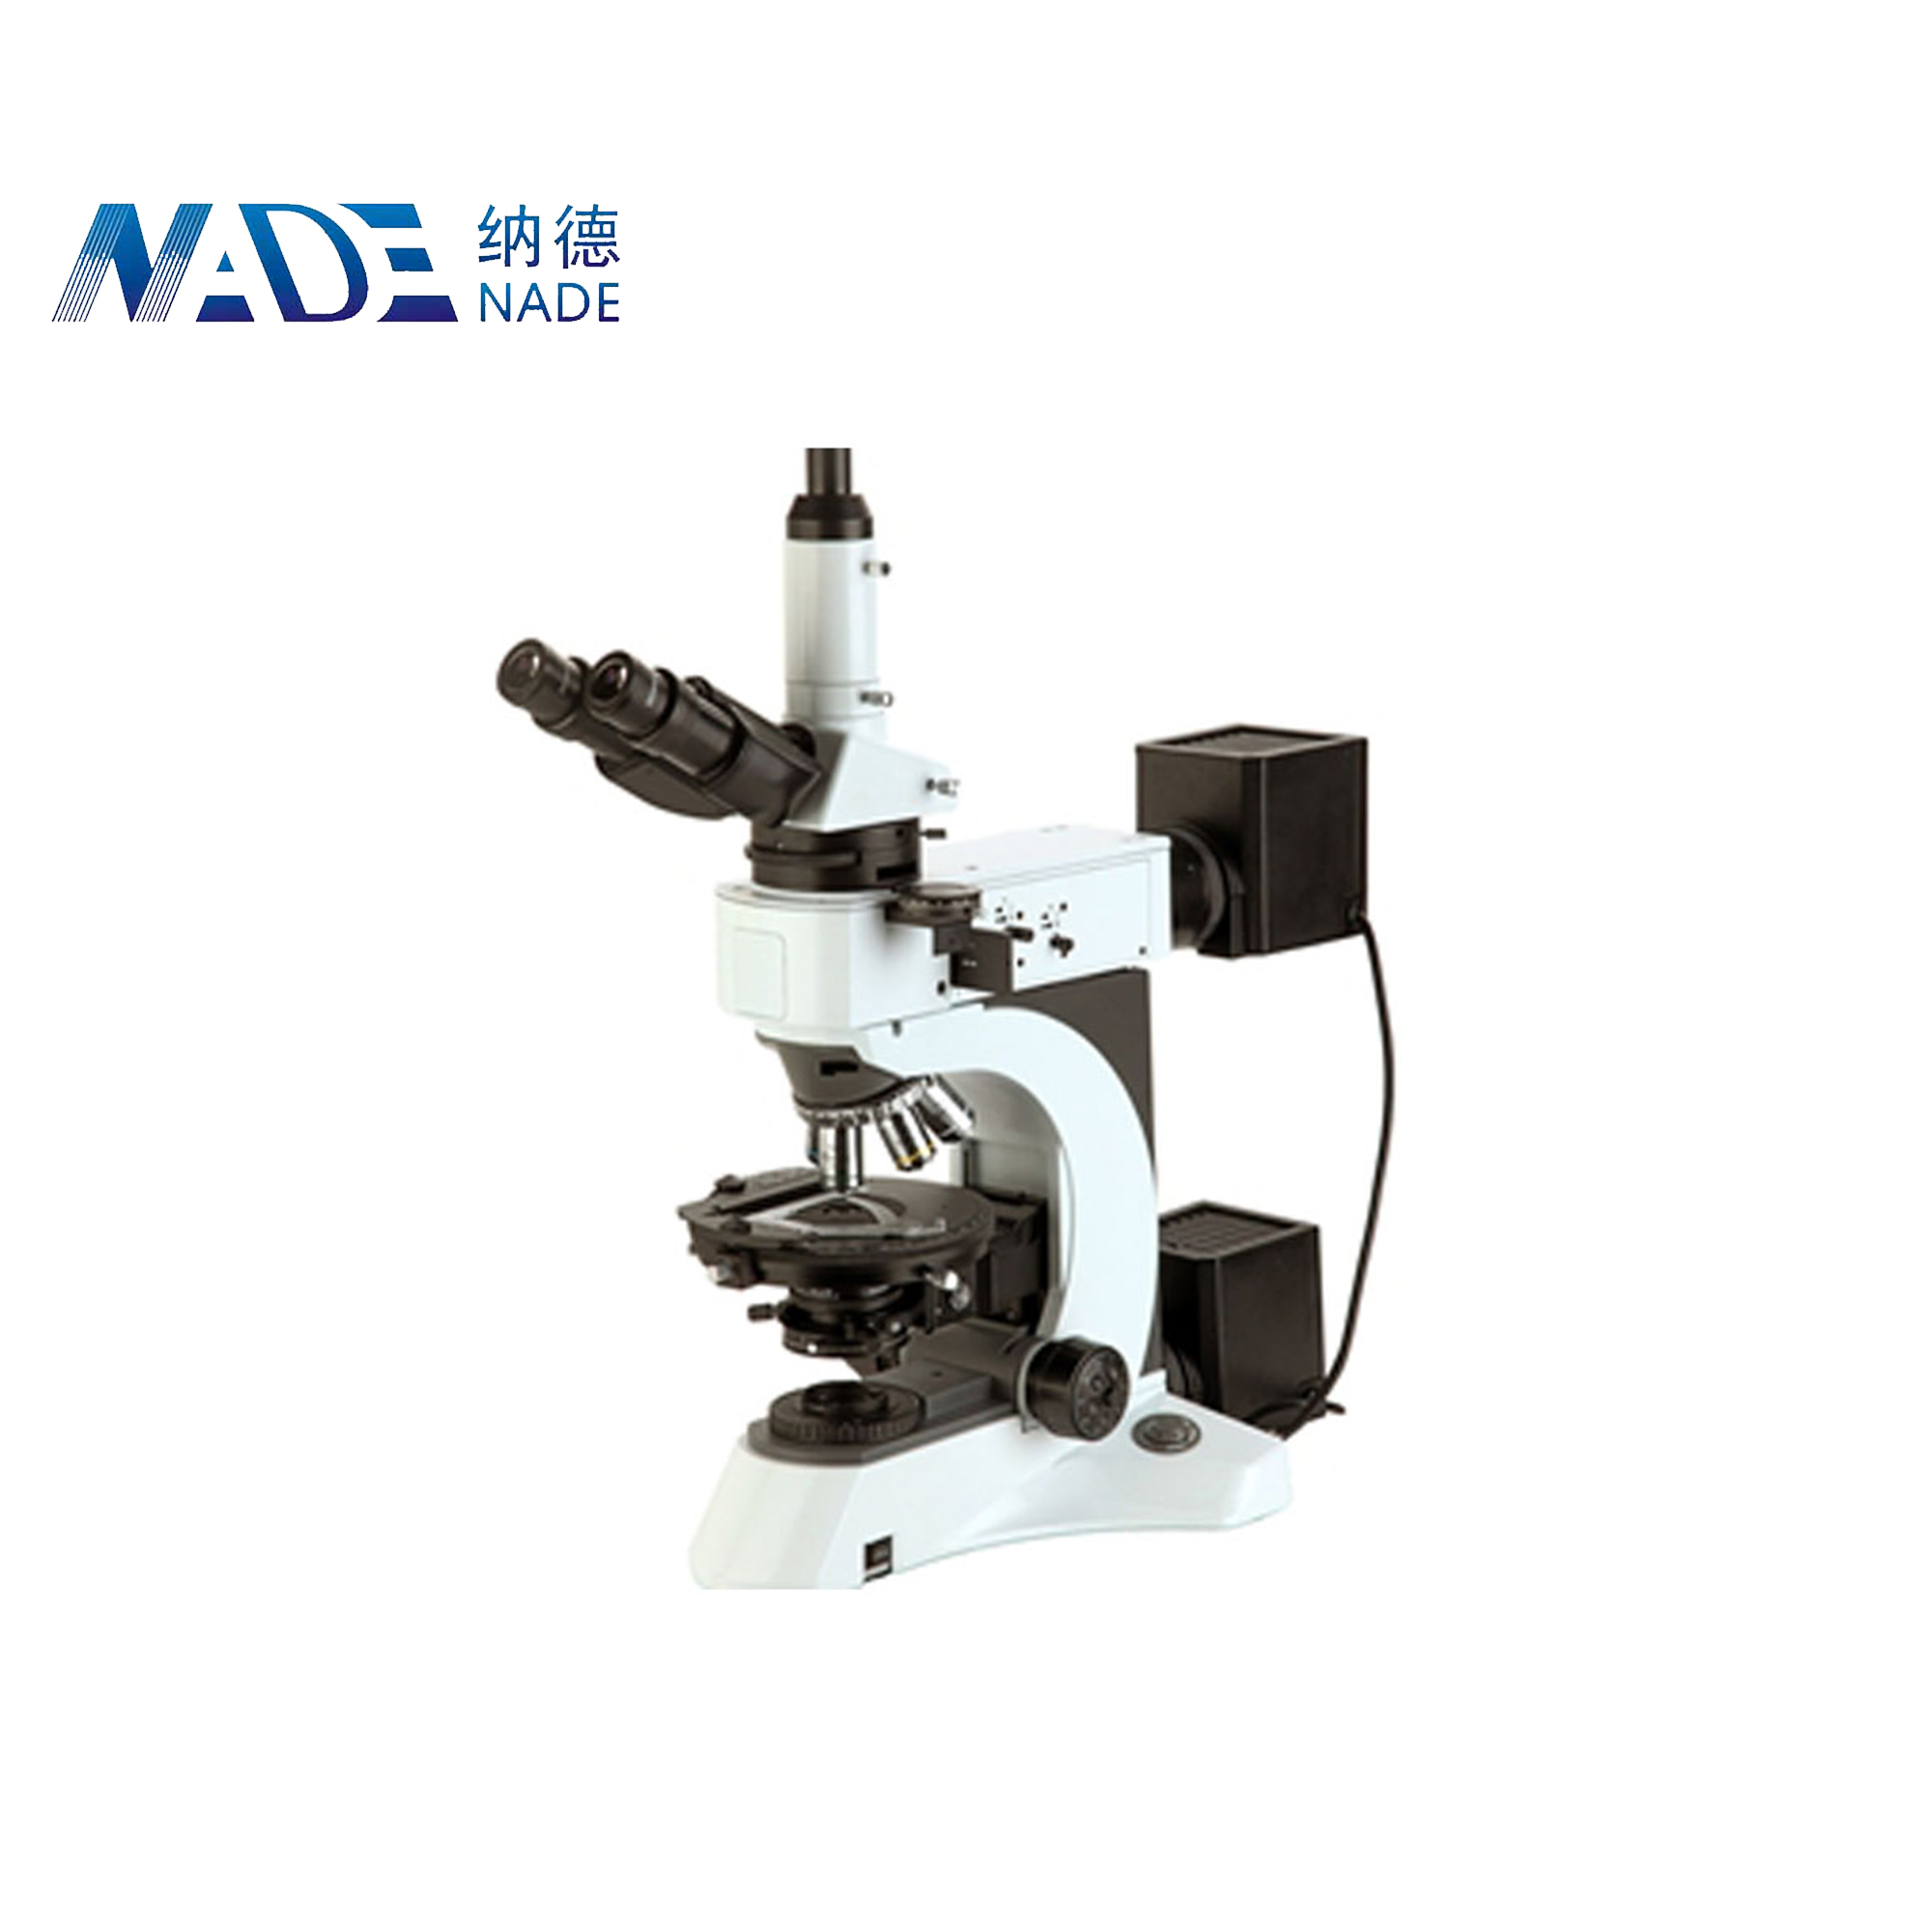 NADE NMM-800RF Lab digital Metallurgical Microscope